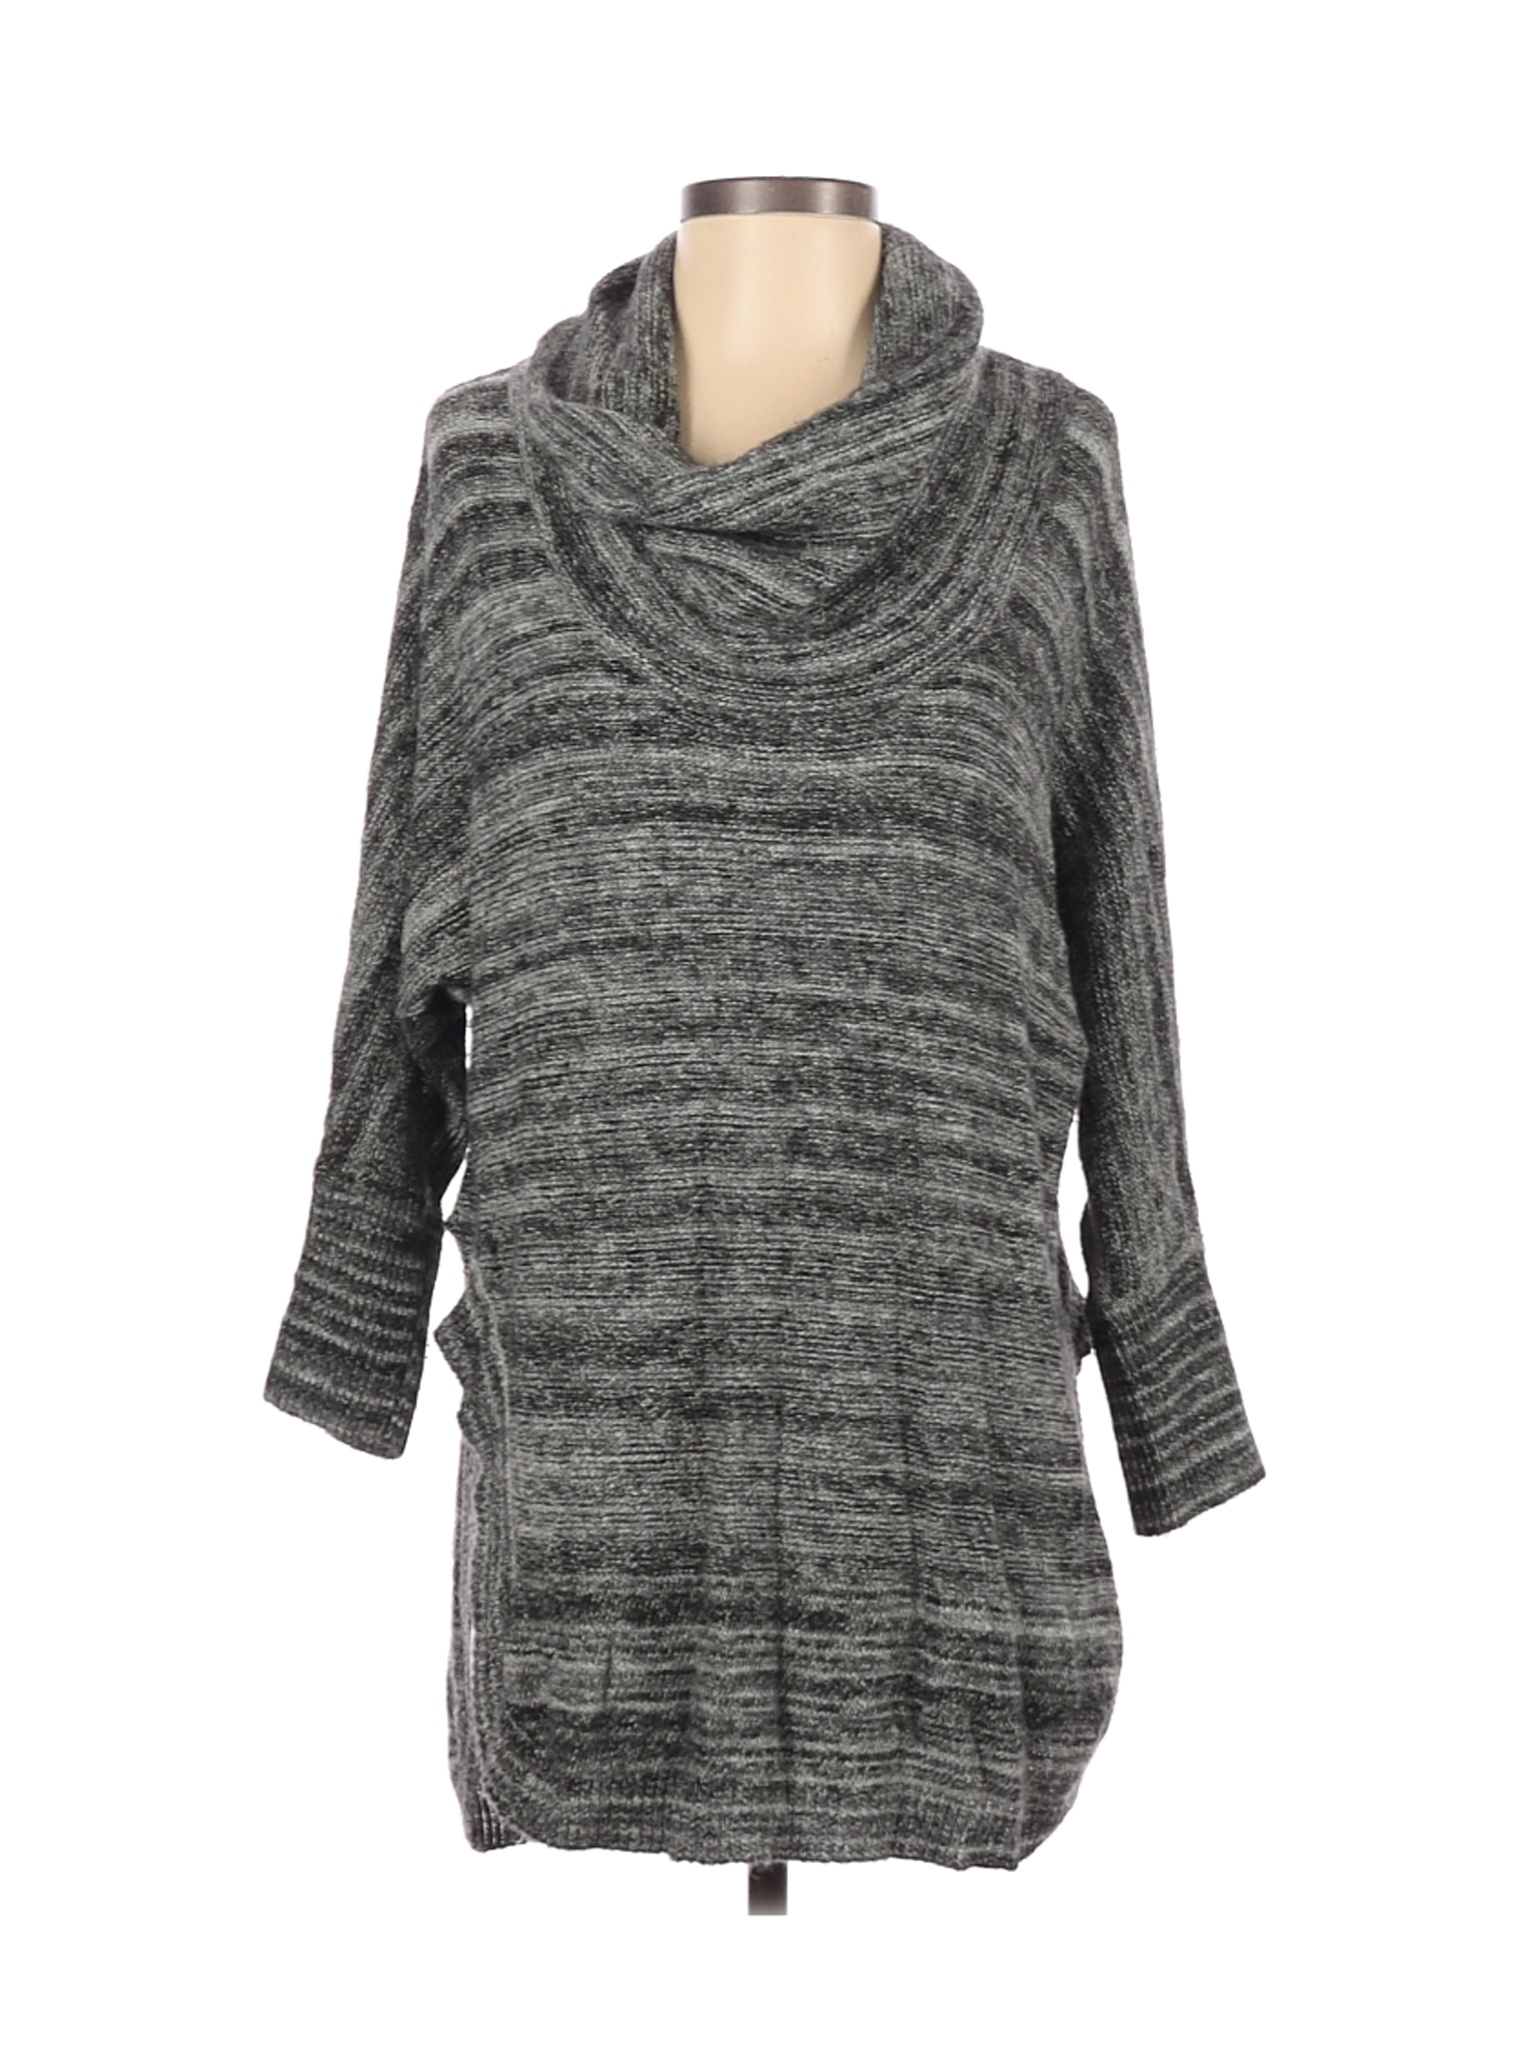 Thistle & Lavender Women Gray Pullover Sweater S | eBay